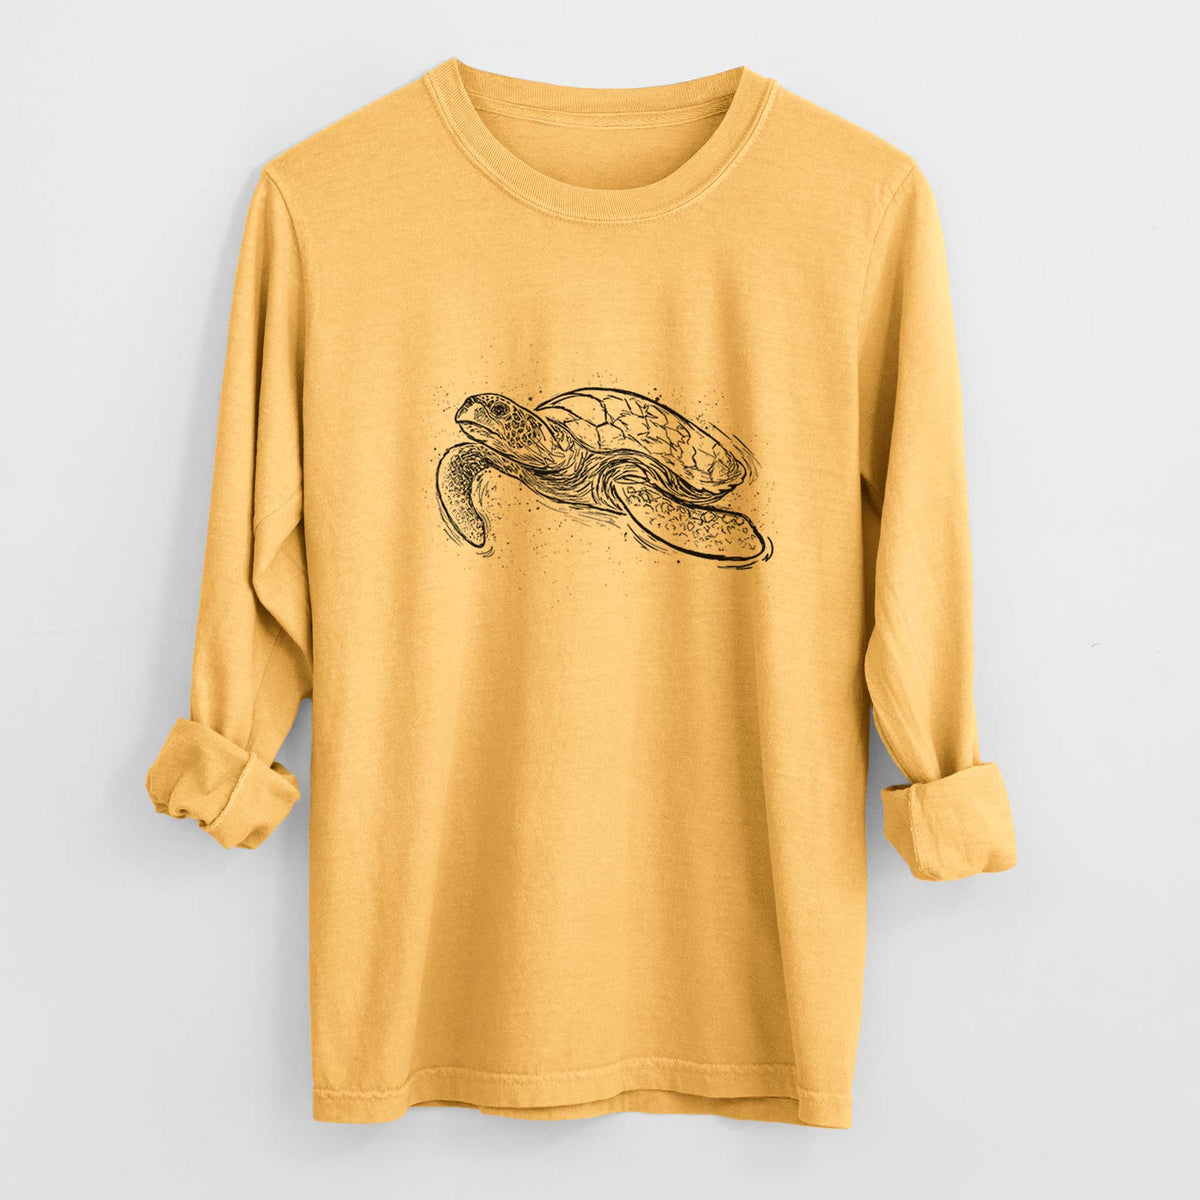 Hawksbill Sea Turtle - Eretmochelys imbricata - Heavyweight 100% Cotton Long Sleeve